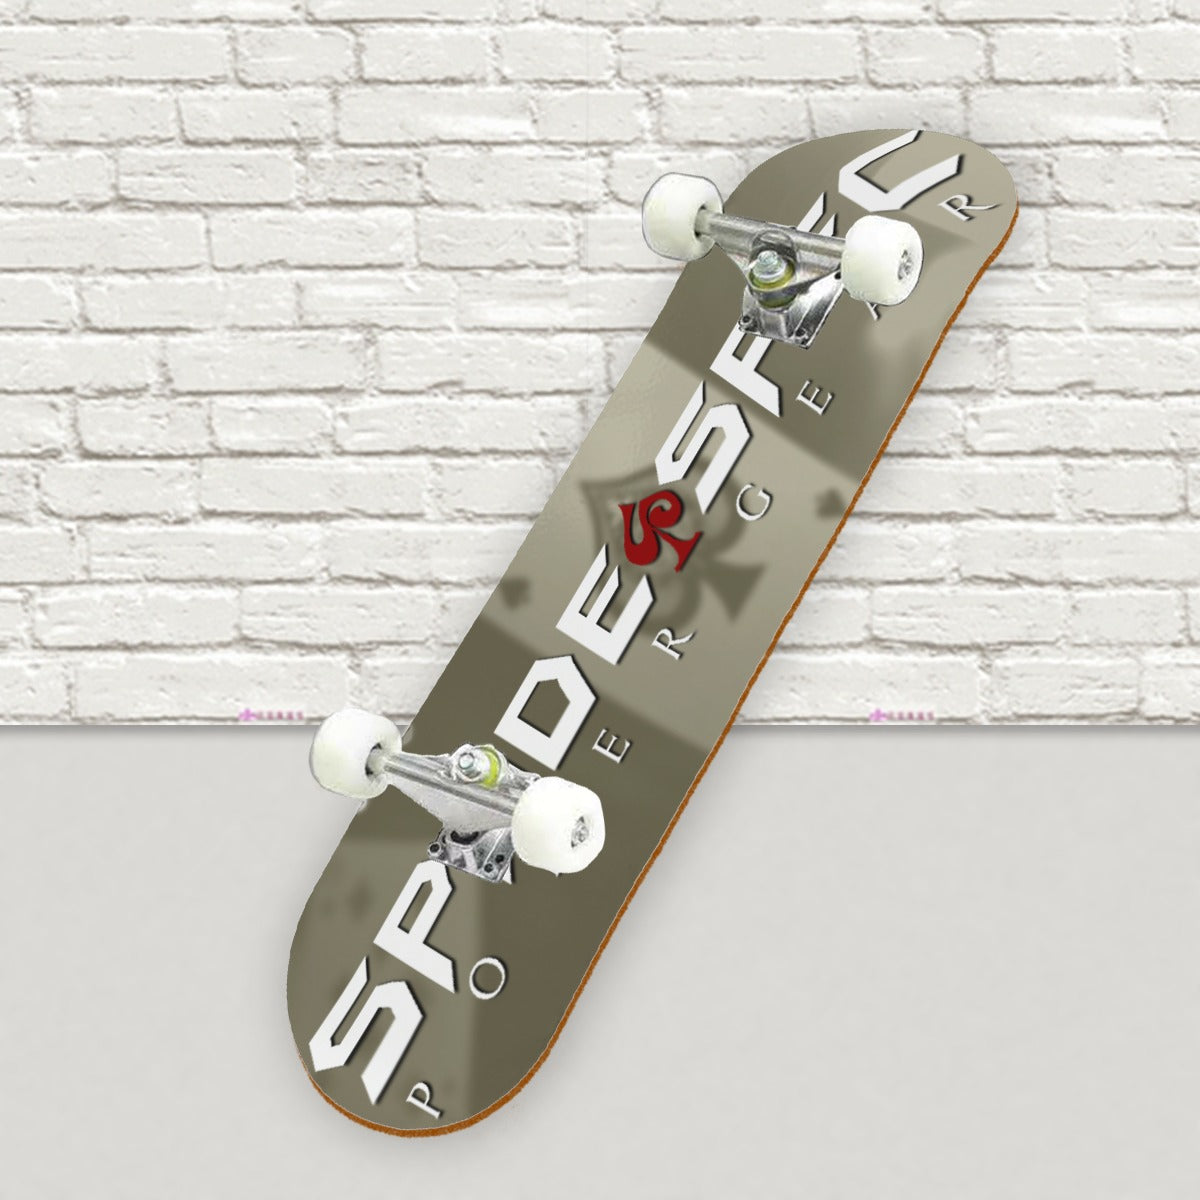 SSPG Skateboard Sticker V2